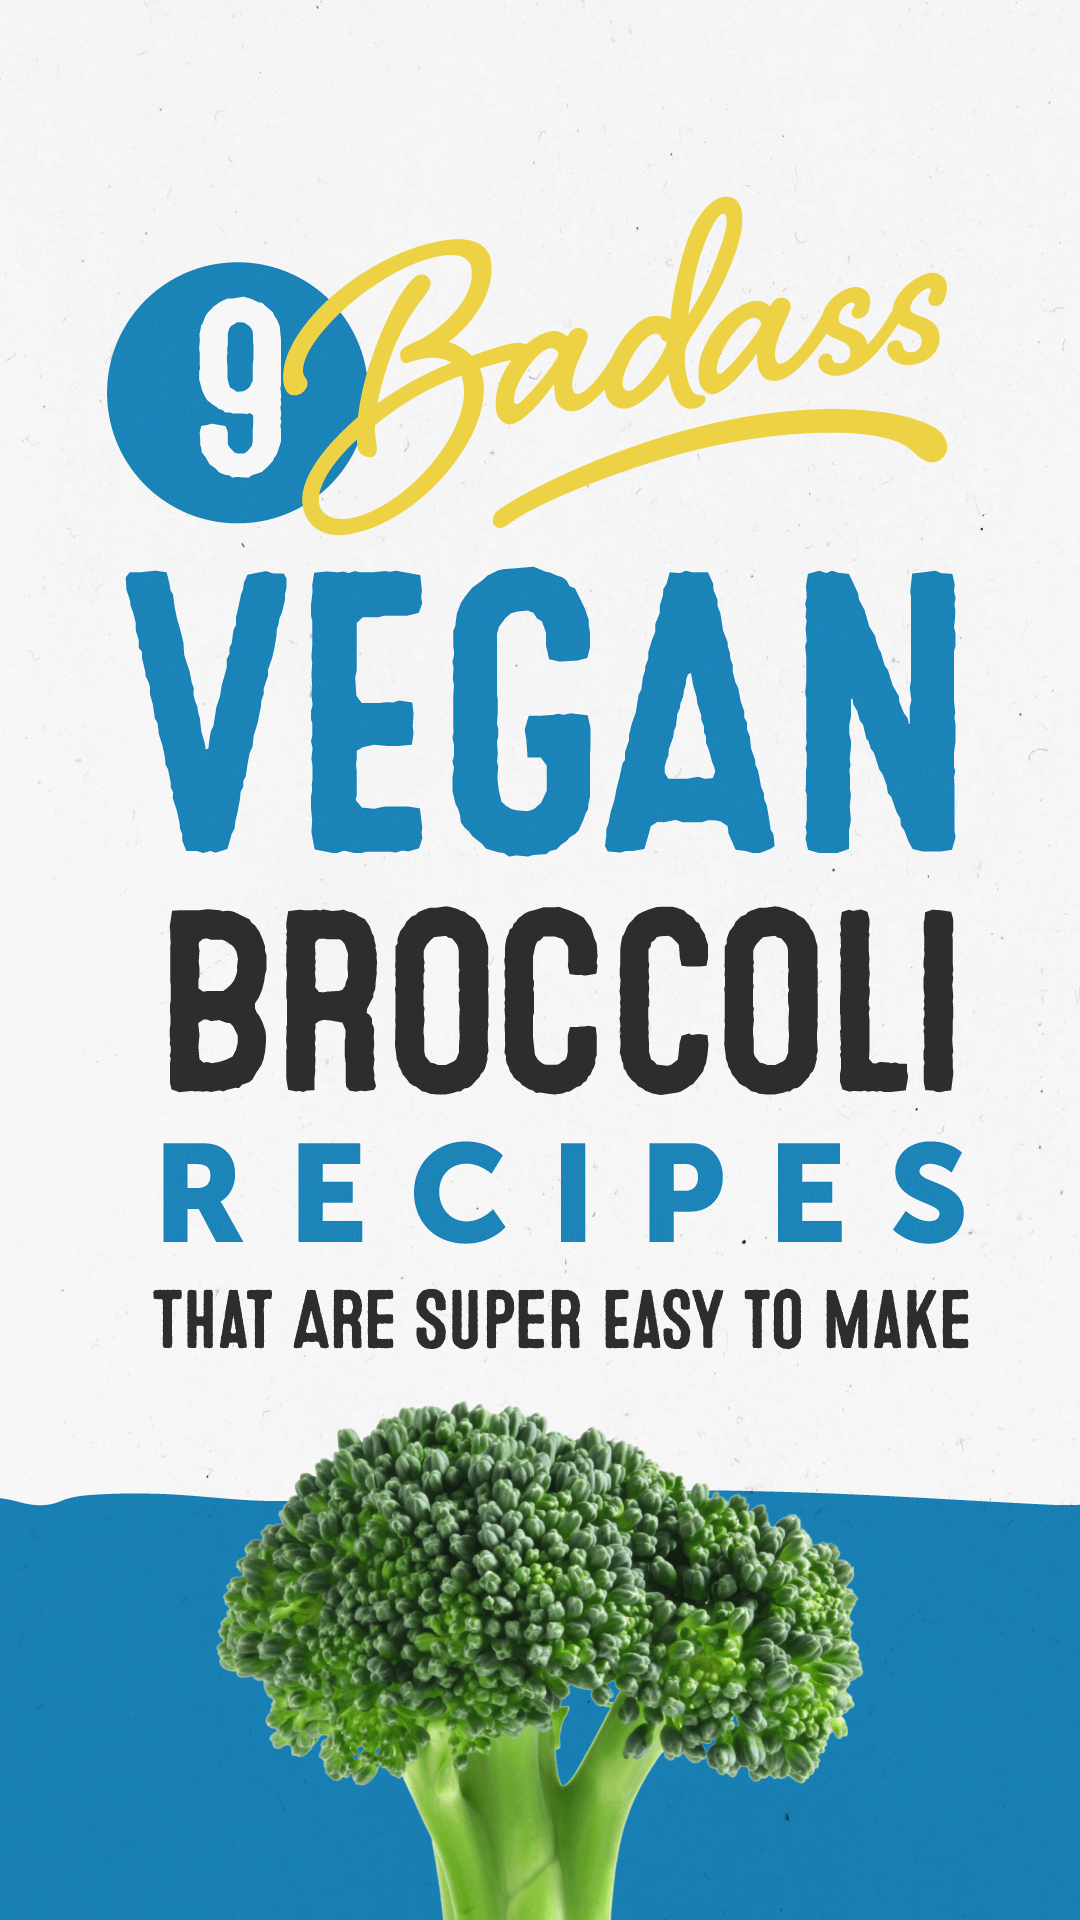 9 Badass Vegan Broccoli Recipes That Are Super Easy to Make